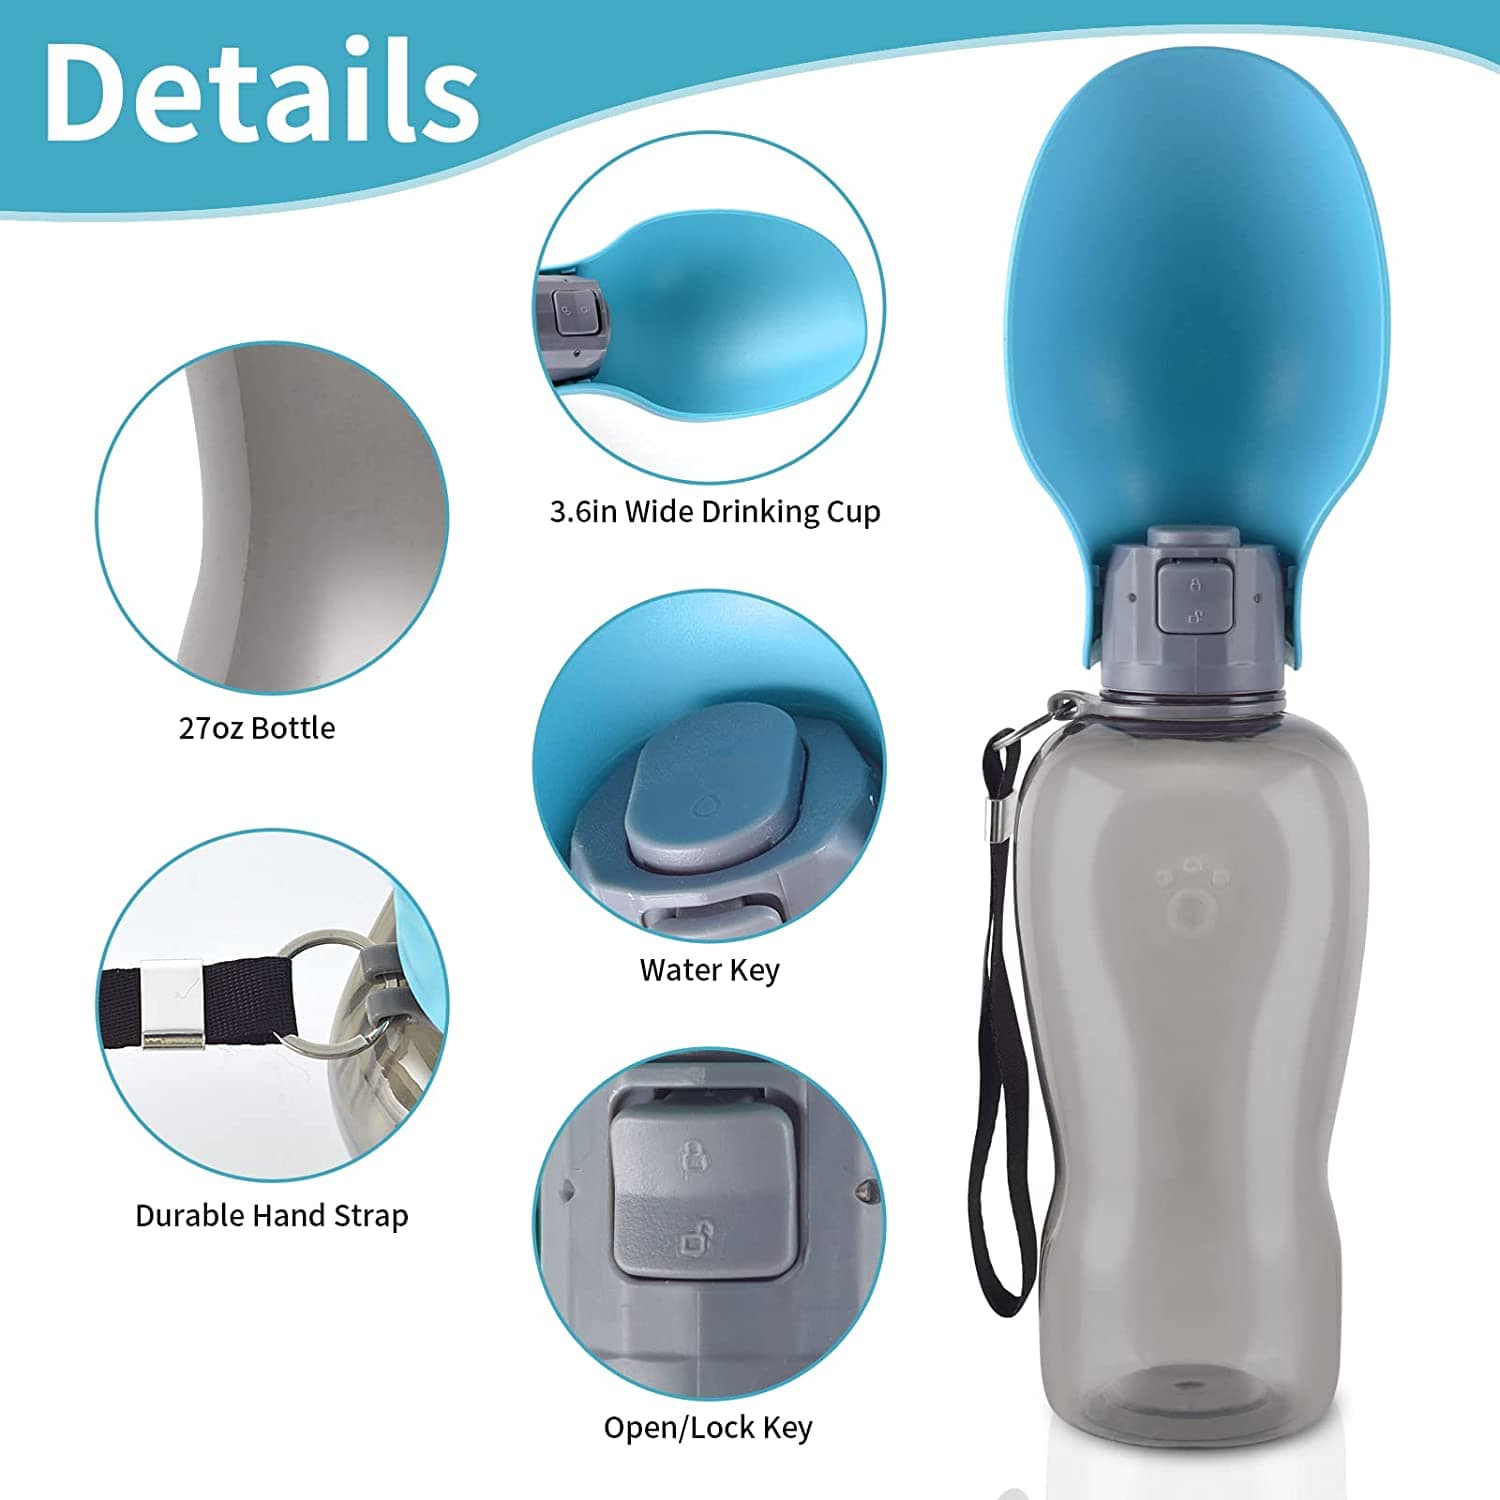 KUTKUT Dog Water Bottle, Portable Dog Water Bottle, 800ML Dog Water Dispenser with Leak-Proof Design for Dog Walking, Hiking and Traveling BPA-Free Materials (Blue, 800ml)… - kutkutstyle